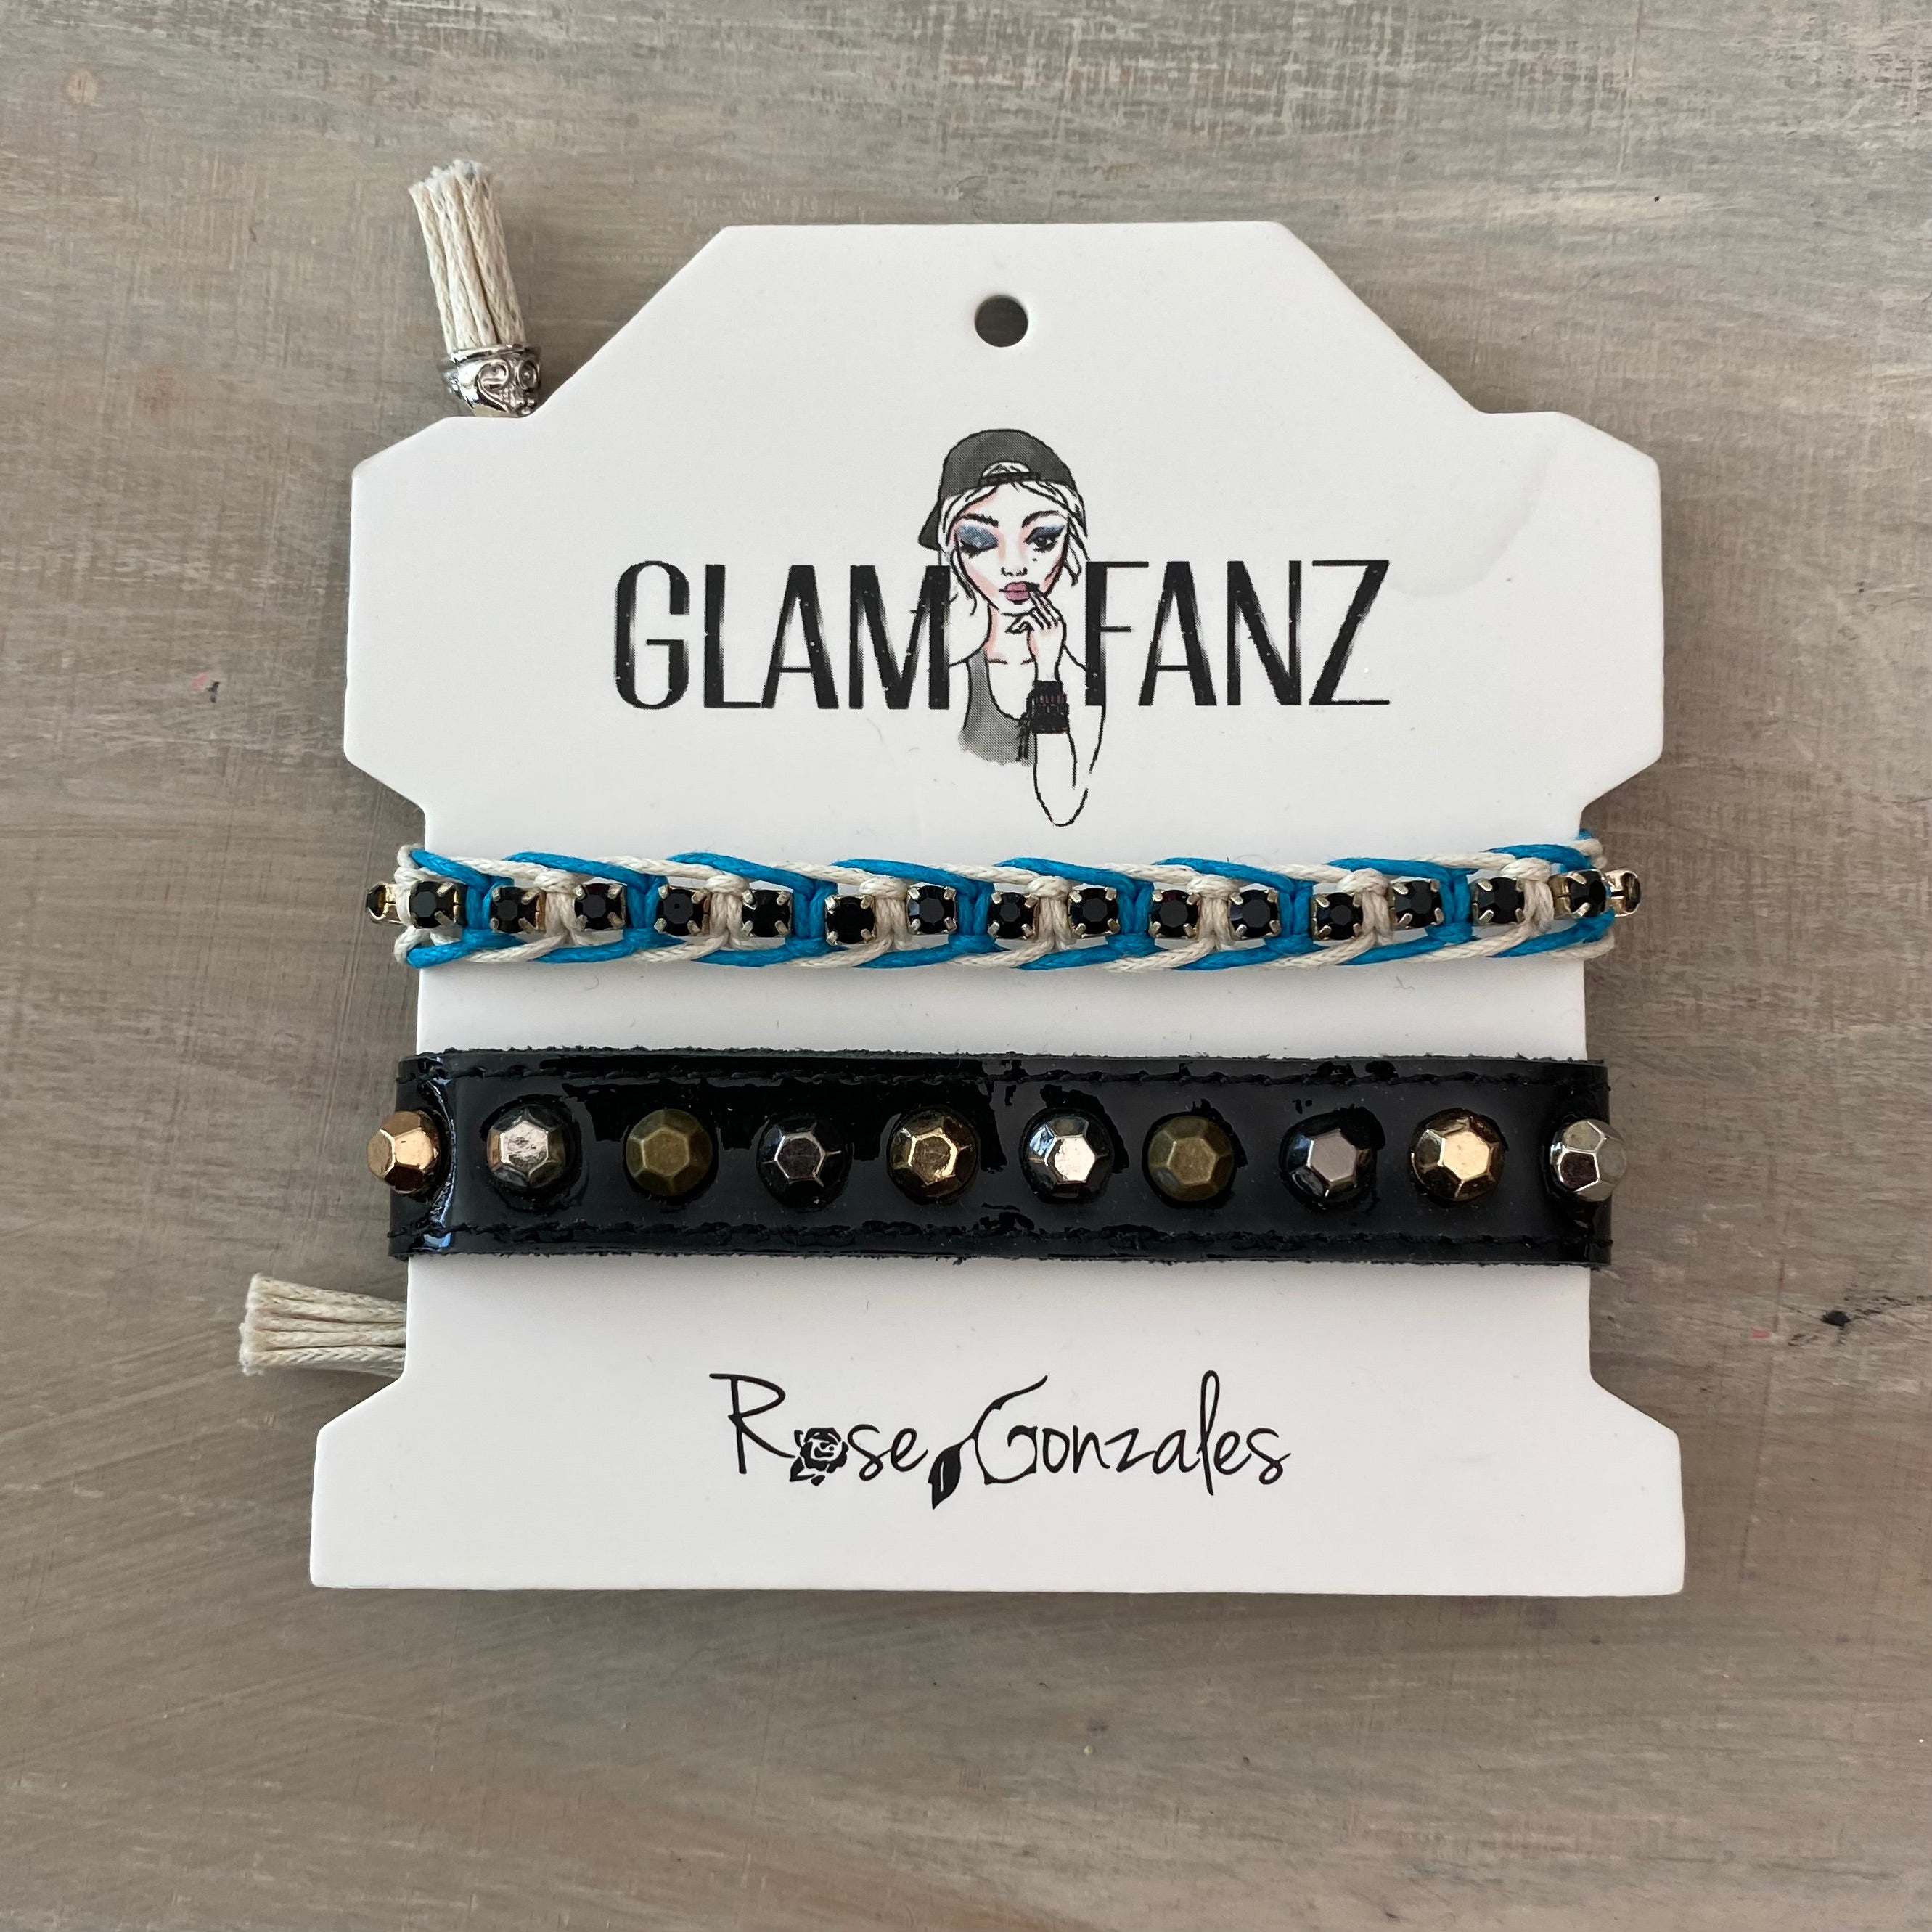 Game Day: Turquoise, Black & White - Macrame String Bracelet Set